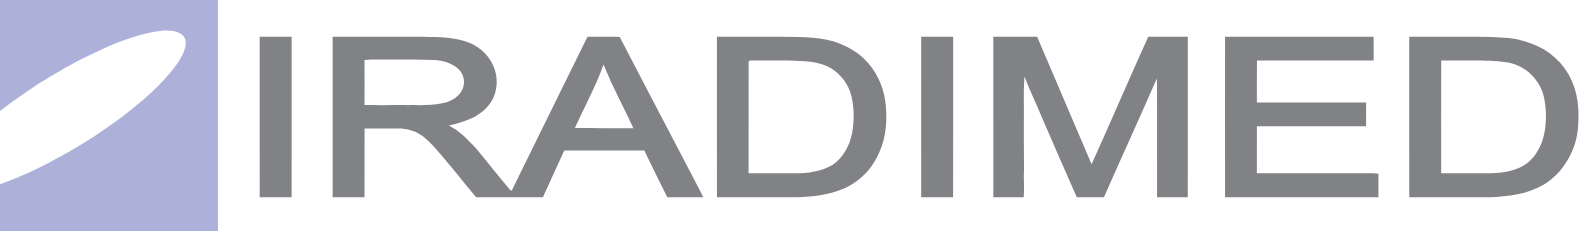 iRadimed logo large (transparent PNG)